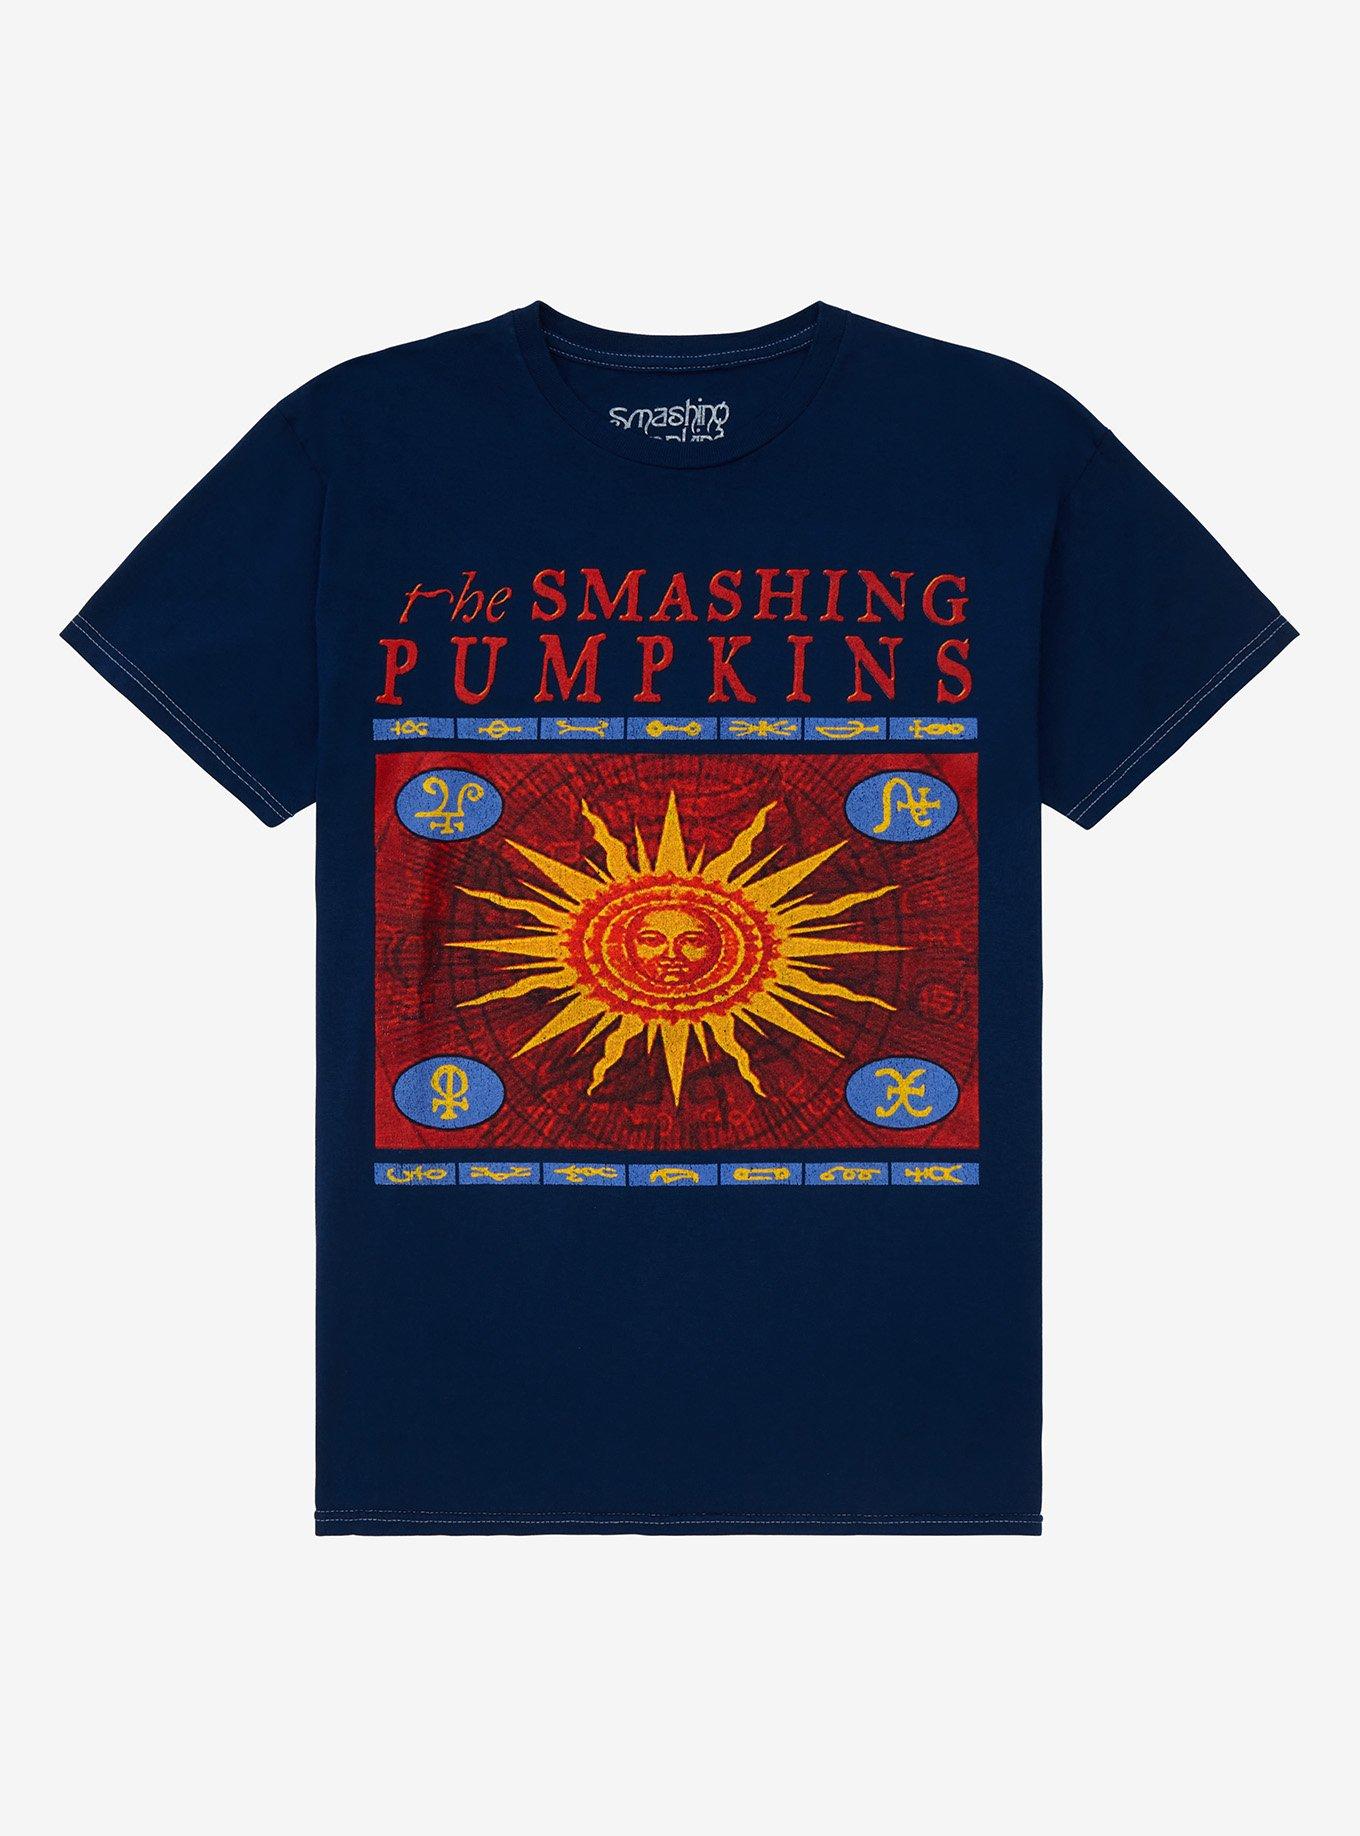 The Smashing Pumpkins Sun & Symbols Boyfriend Fit Girls T-Shirt